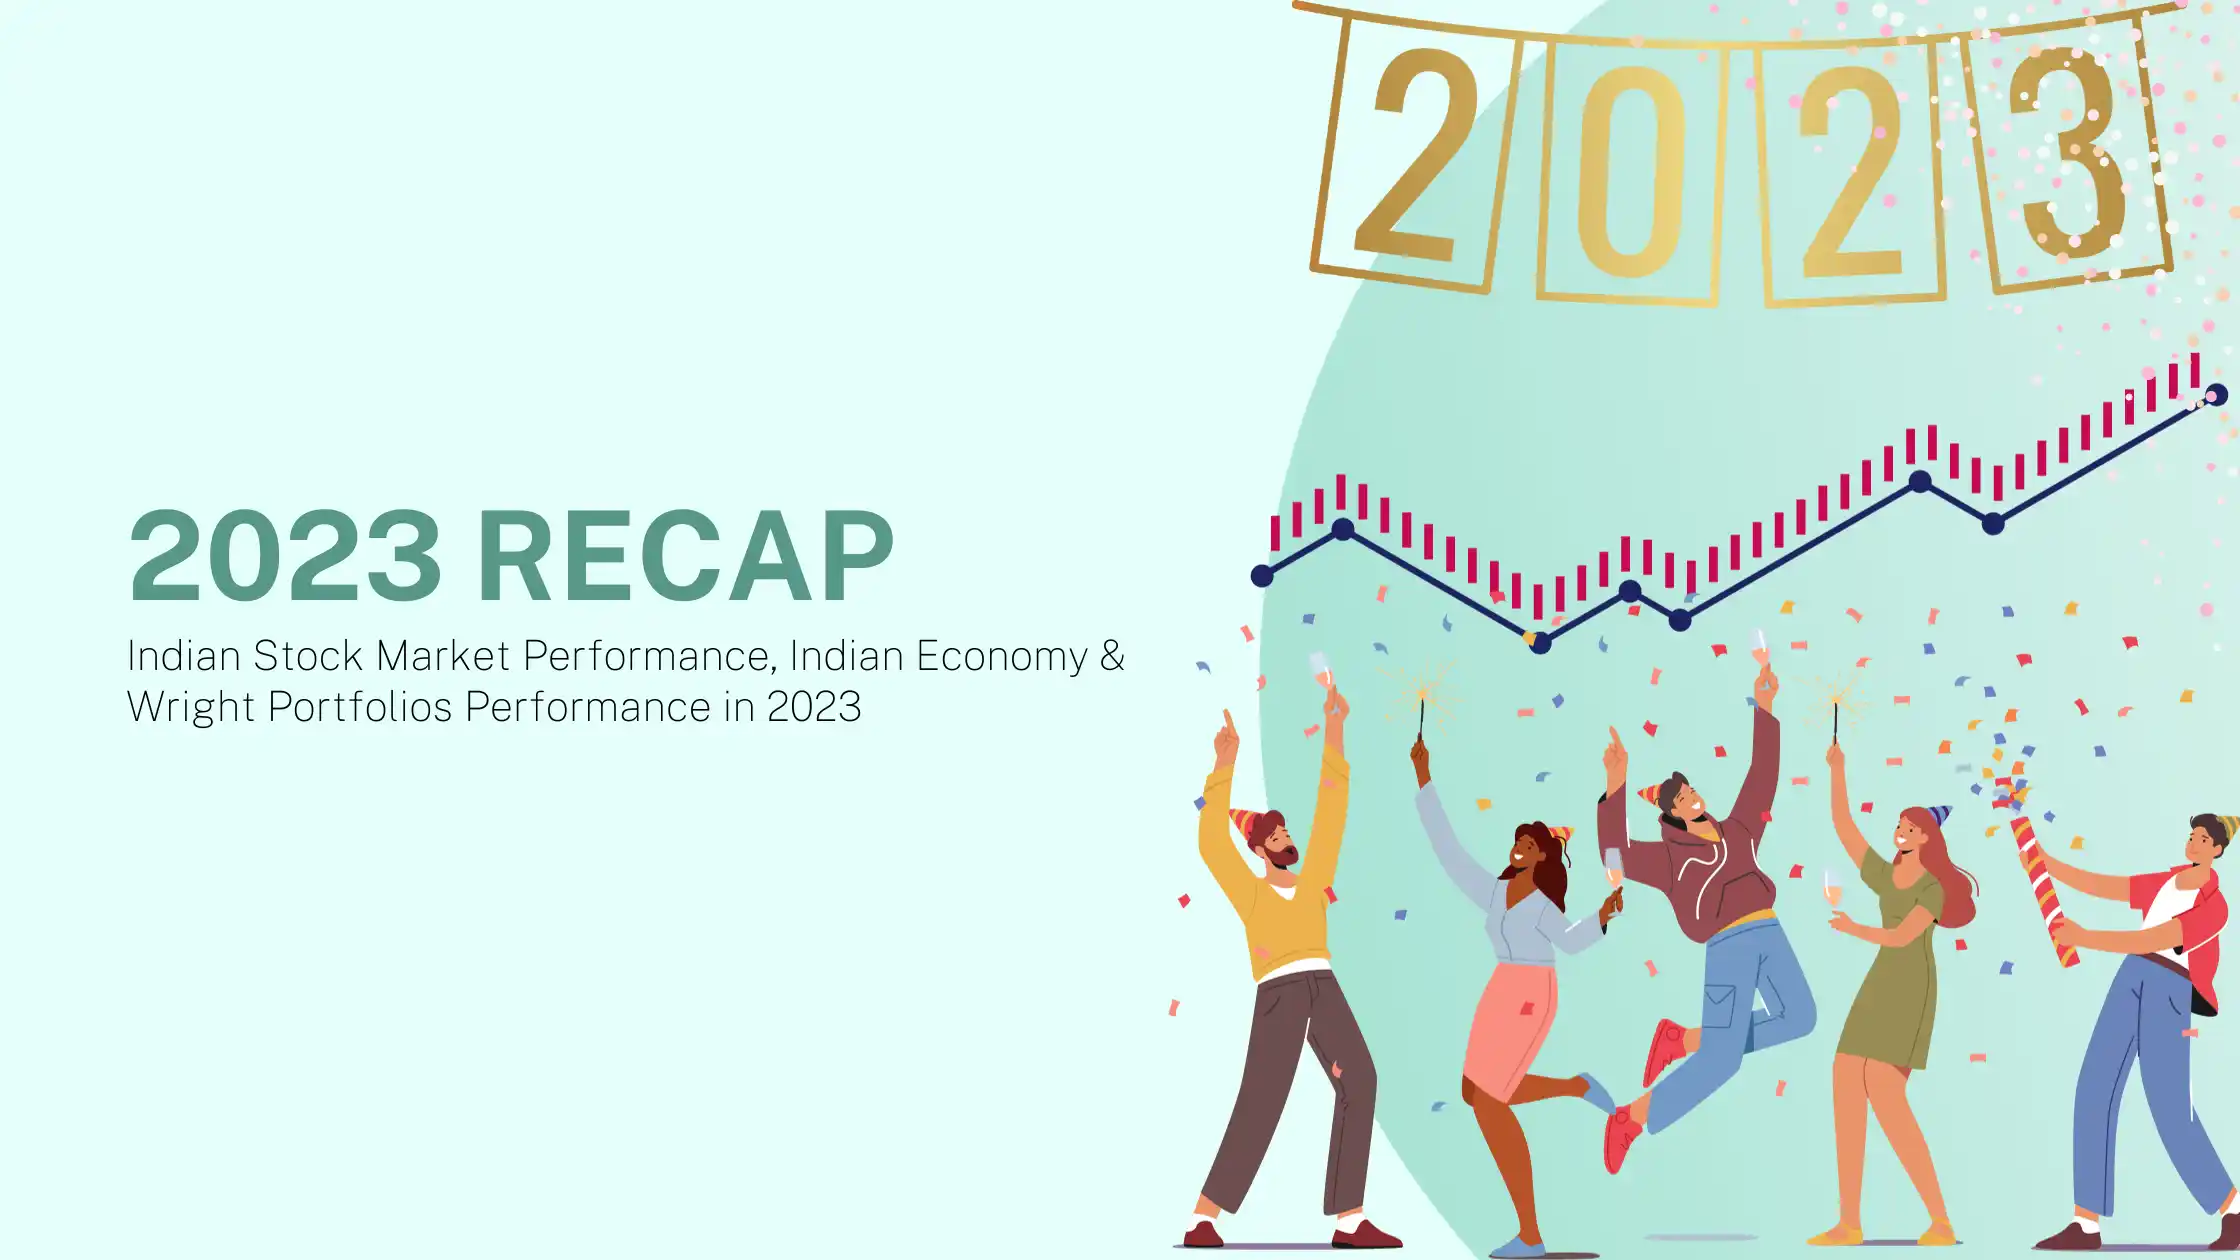 2023 Recap: Indian Stock Market Performance, Indian Economy & Wright Portfolios Performance in 2023